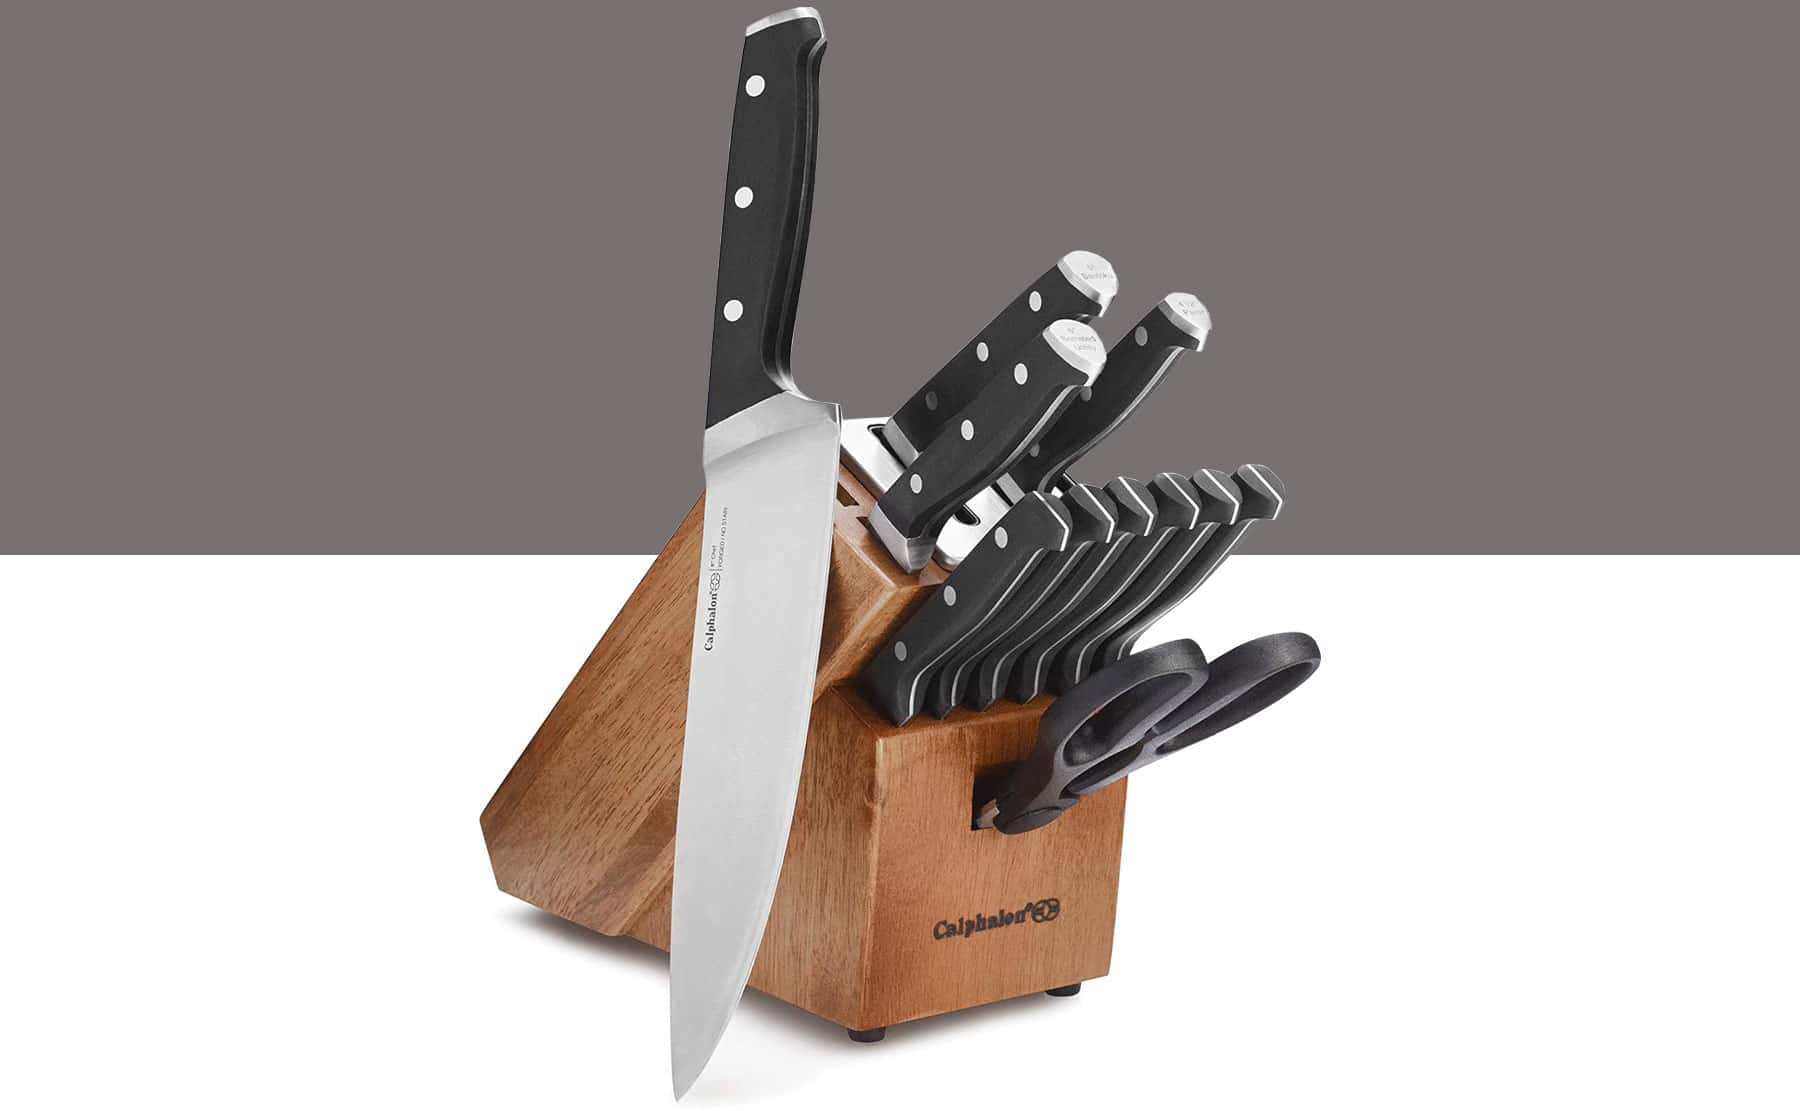 https://www.nothingbutknives.com/wp-content/uploads/2017/03/Best-Budget-Self-Sharpening-Knife-Set.jpg